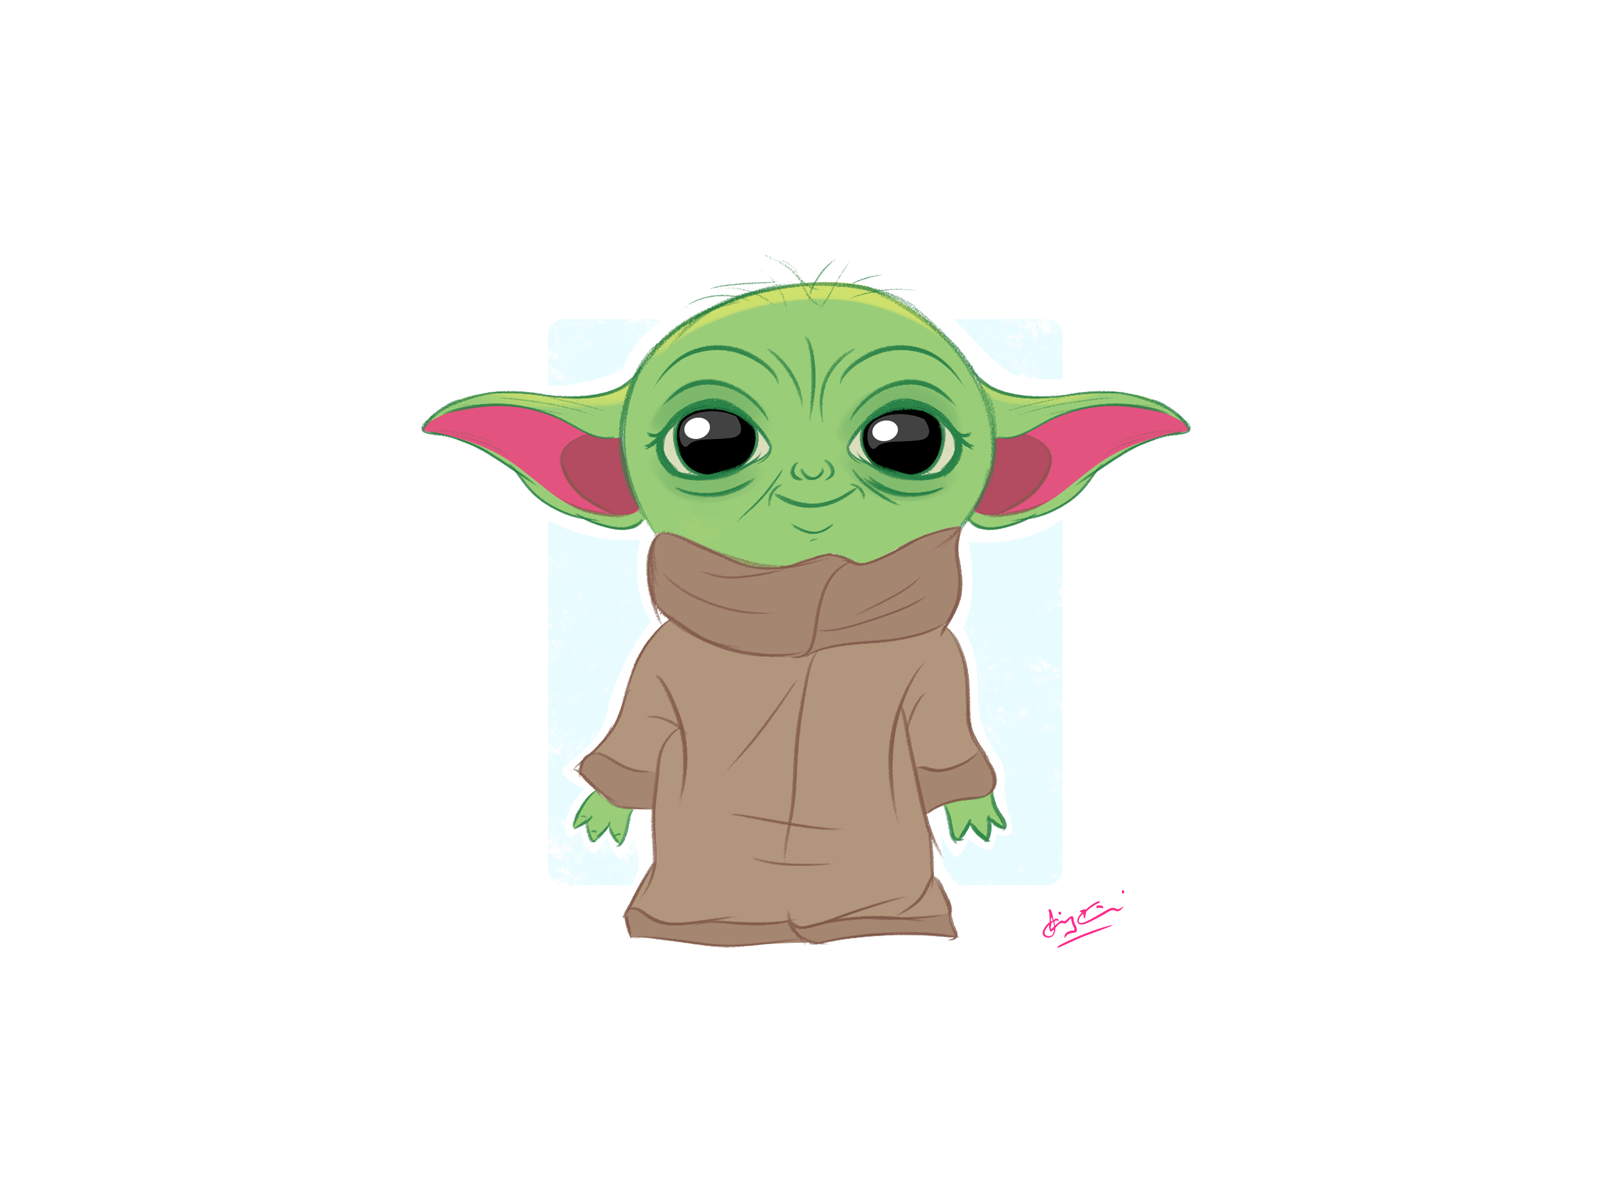 Baby Yoda Character by chirag mansuri on Dribbble